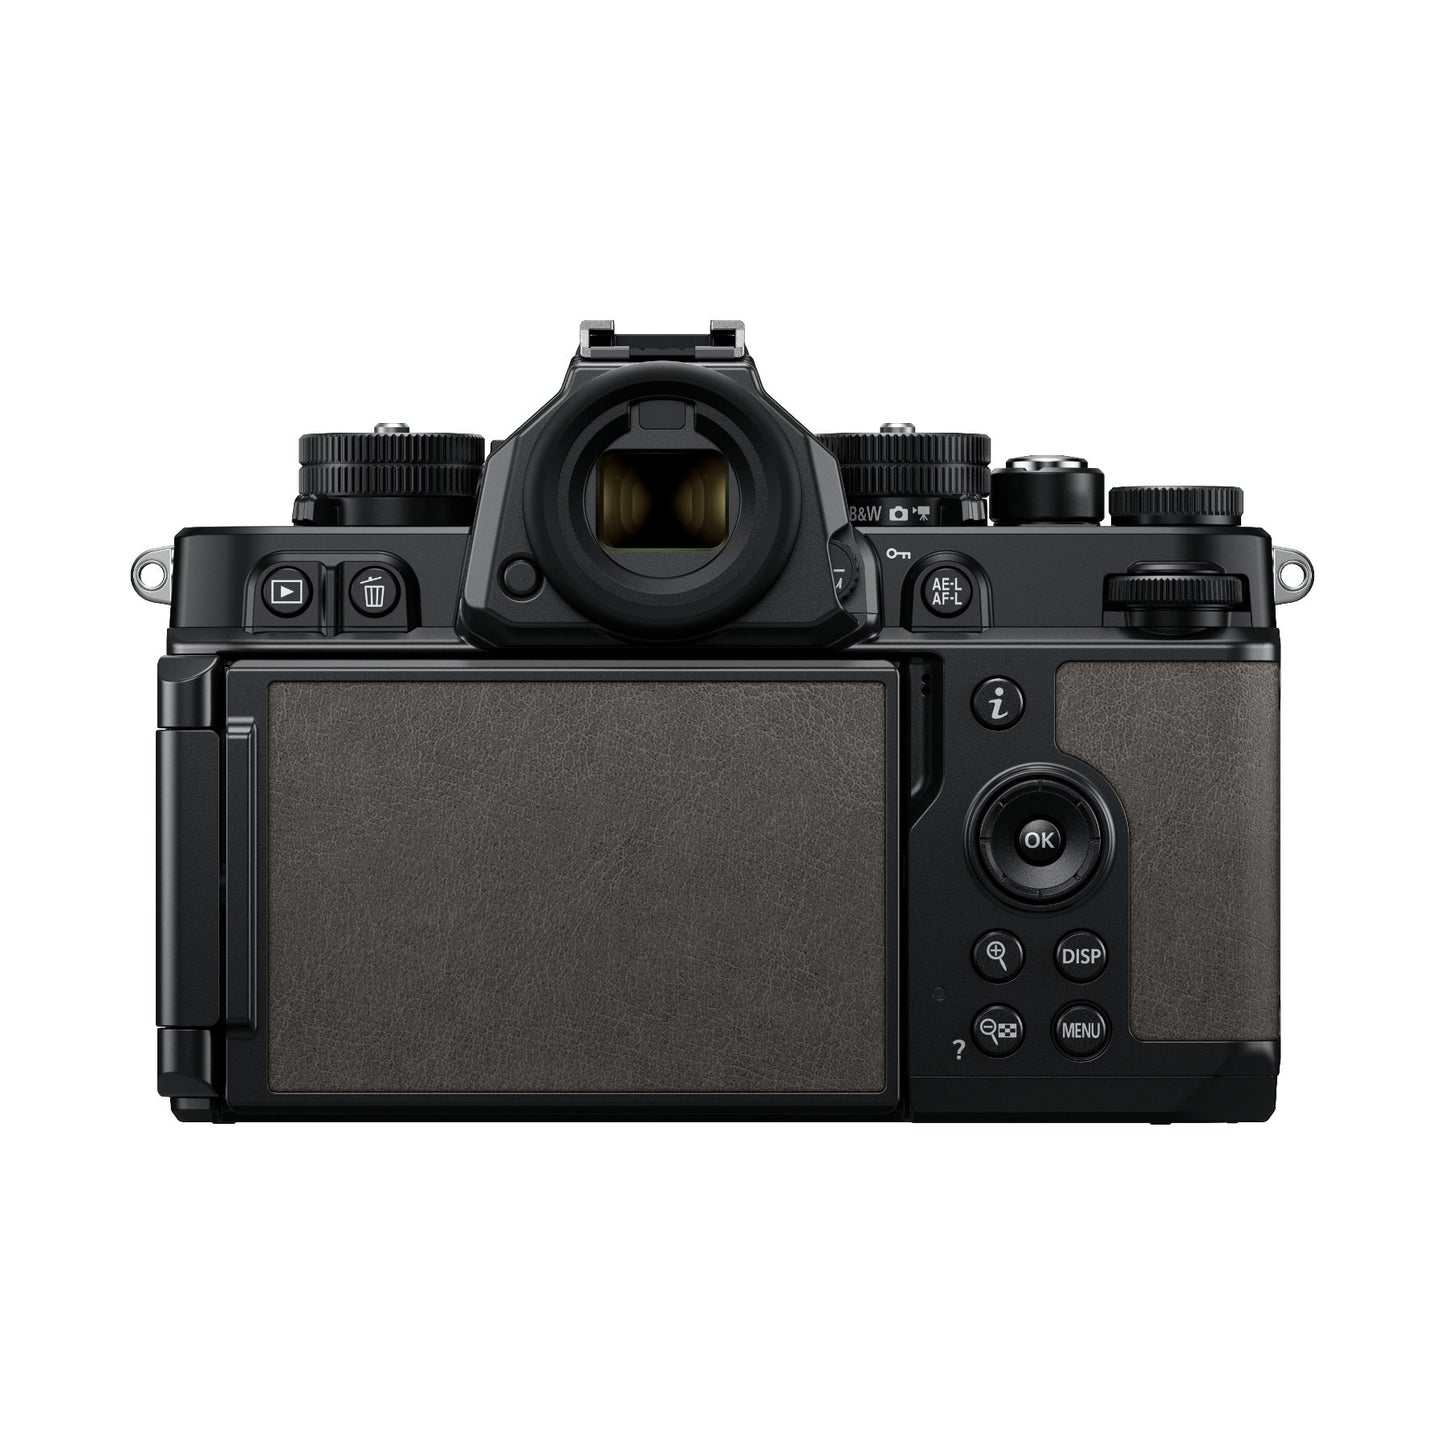 Nikon Zf Mirrorless Camera (Body Only)